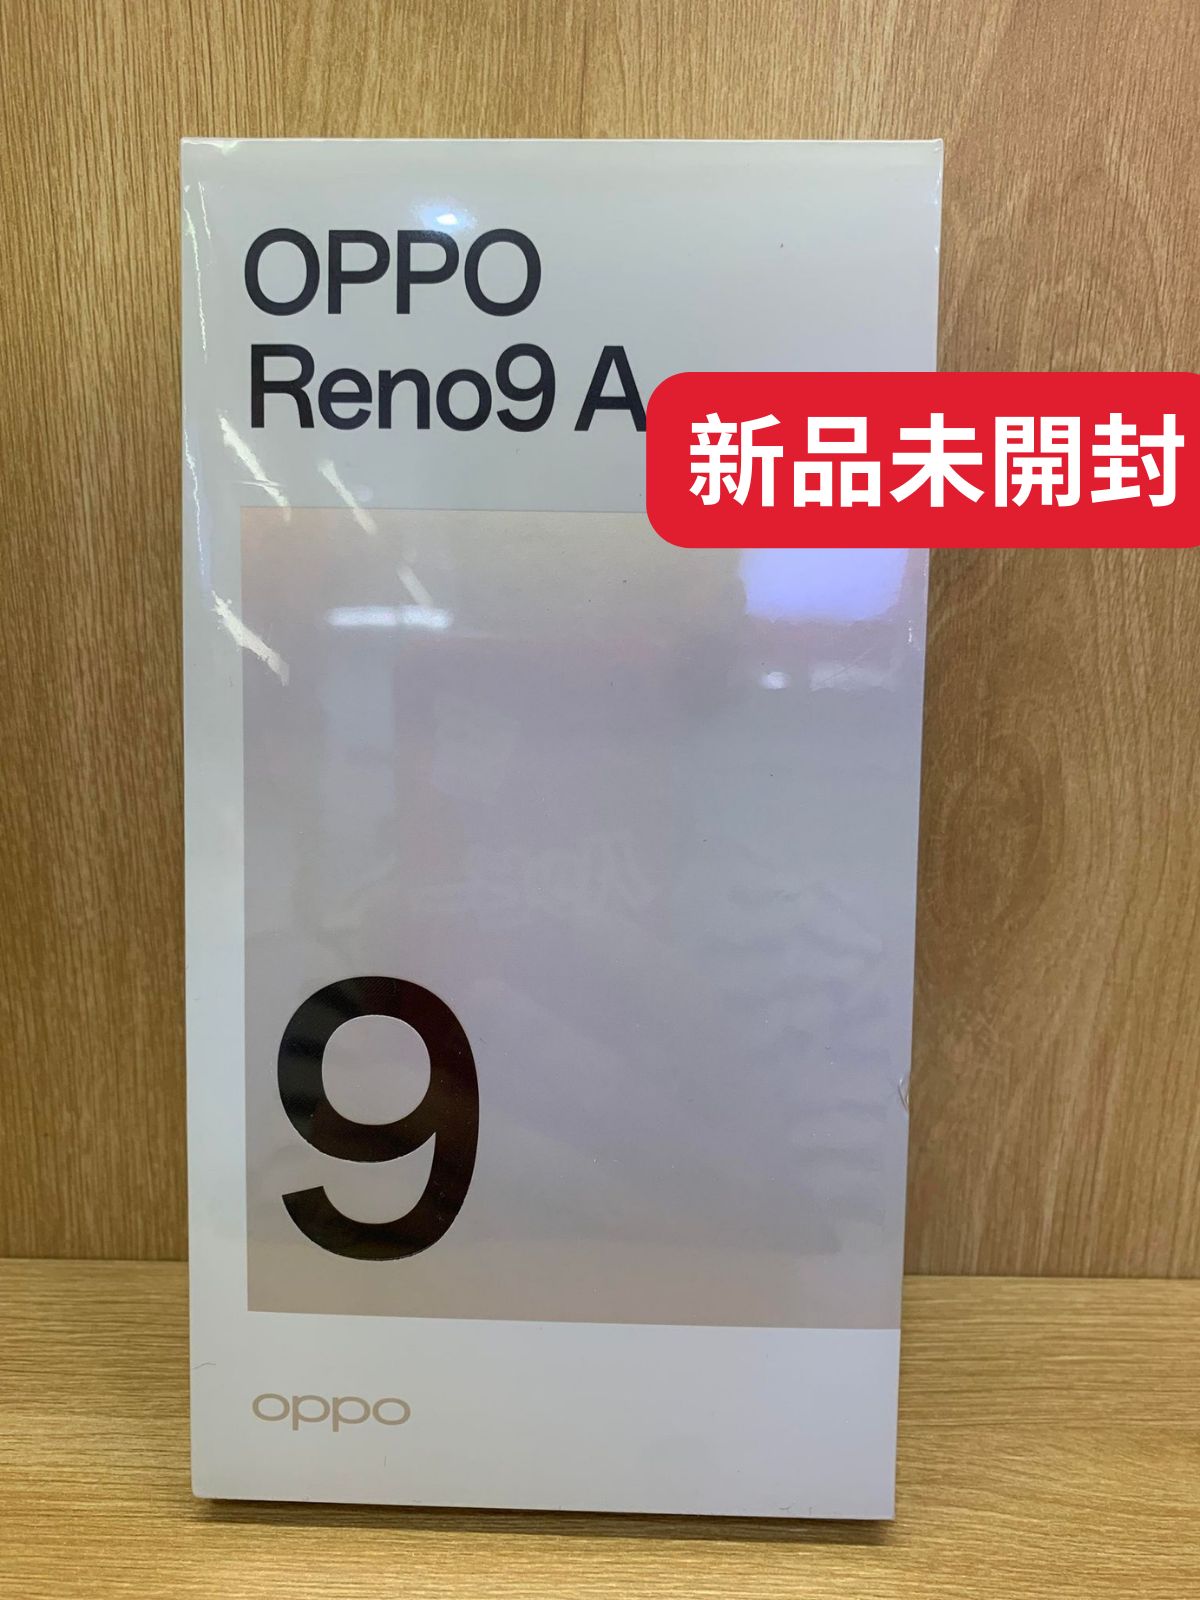 OPPO Reno9 A ムーンホワイト 128 GB Y!mobile - メルカリ